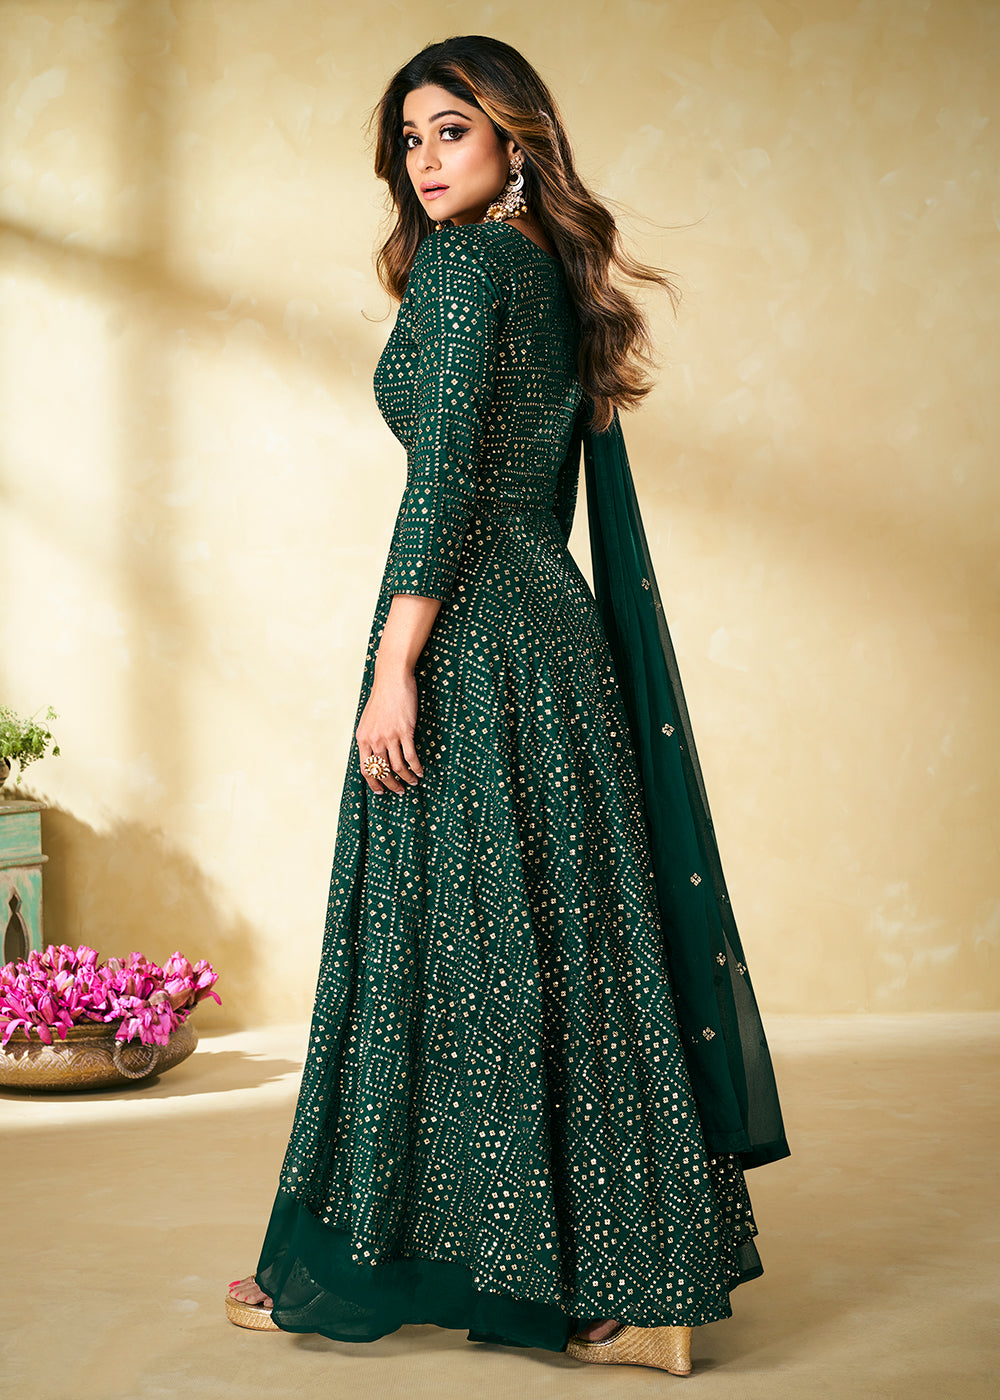 Pakistani Dress Indian Designer Salwar Kameez Bollywood suit Party Wear  Wedding | eBay